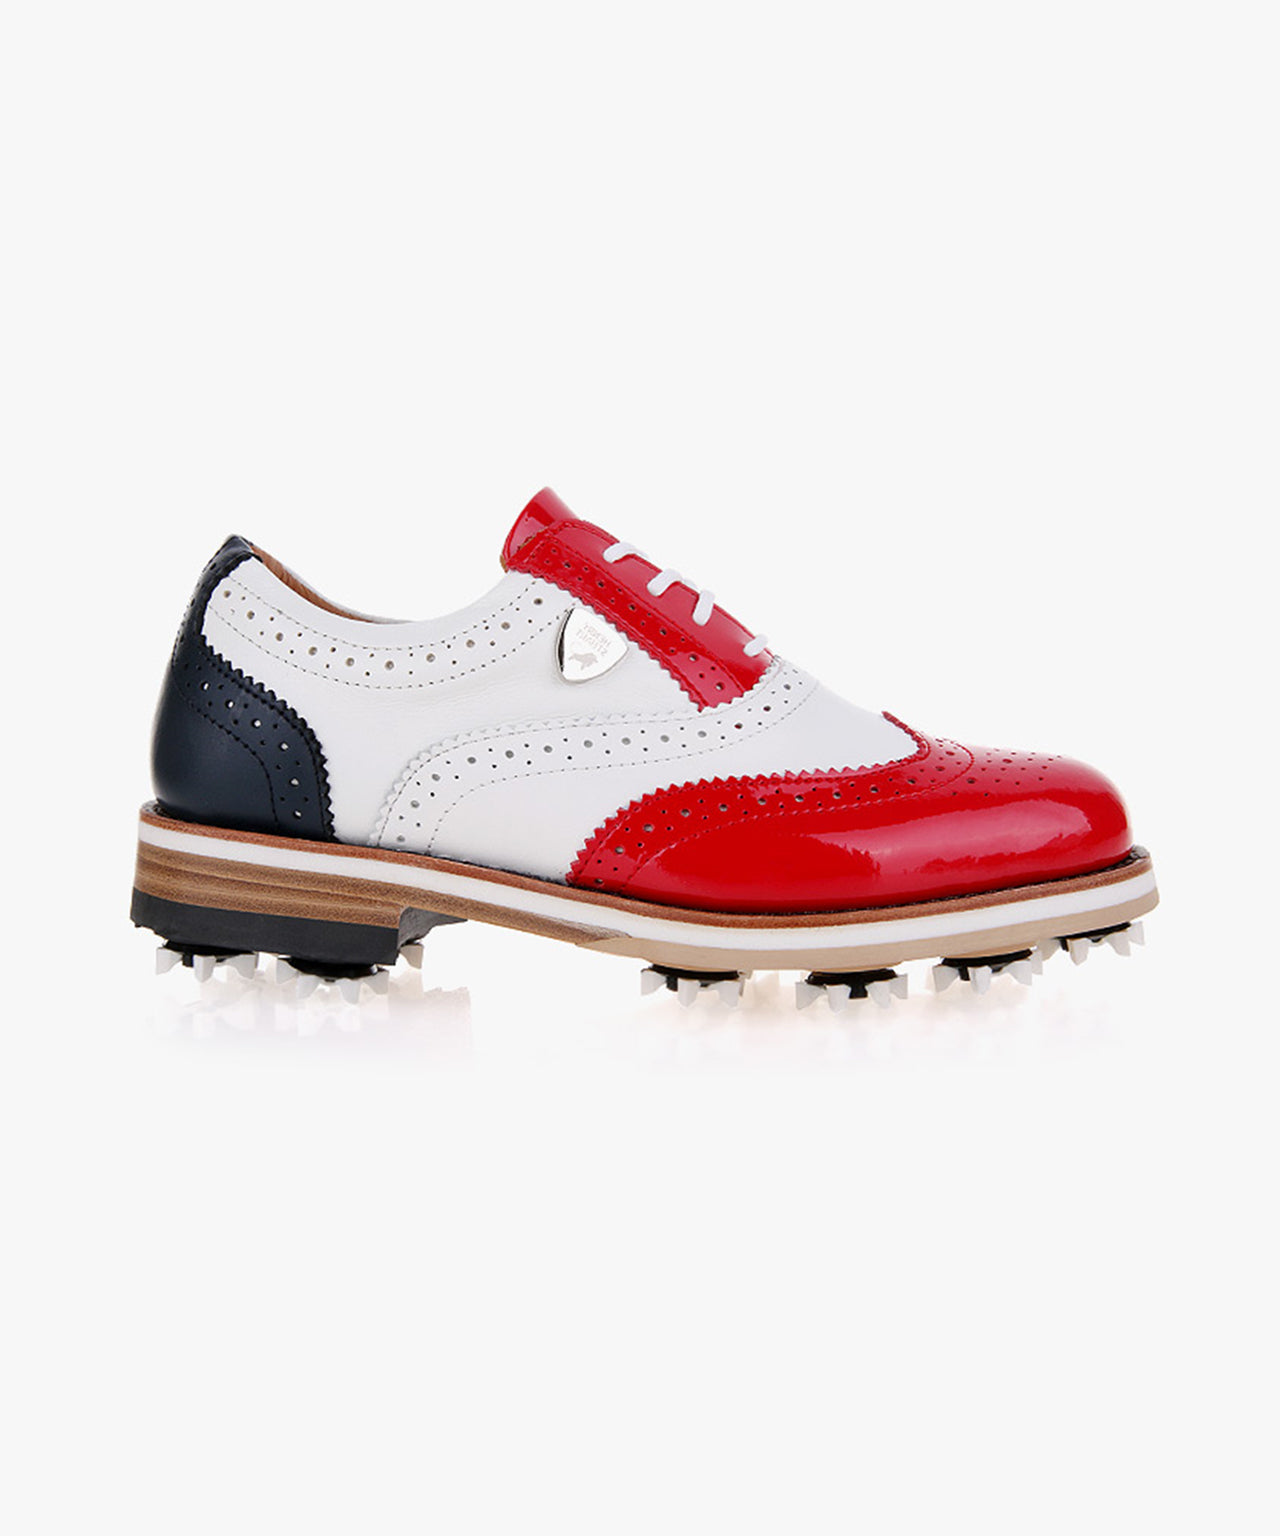 HENRY STUART Mysuit Classic Women's Spike Golf Shoes 106 - Red